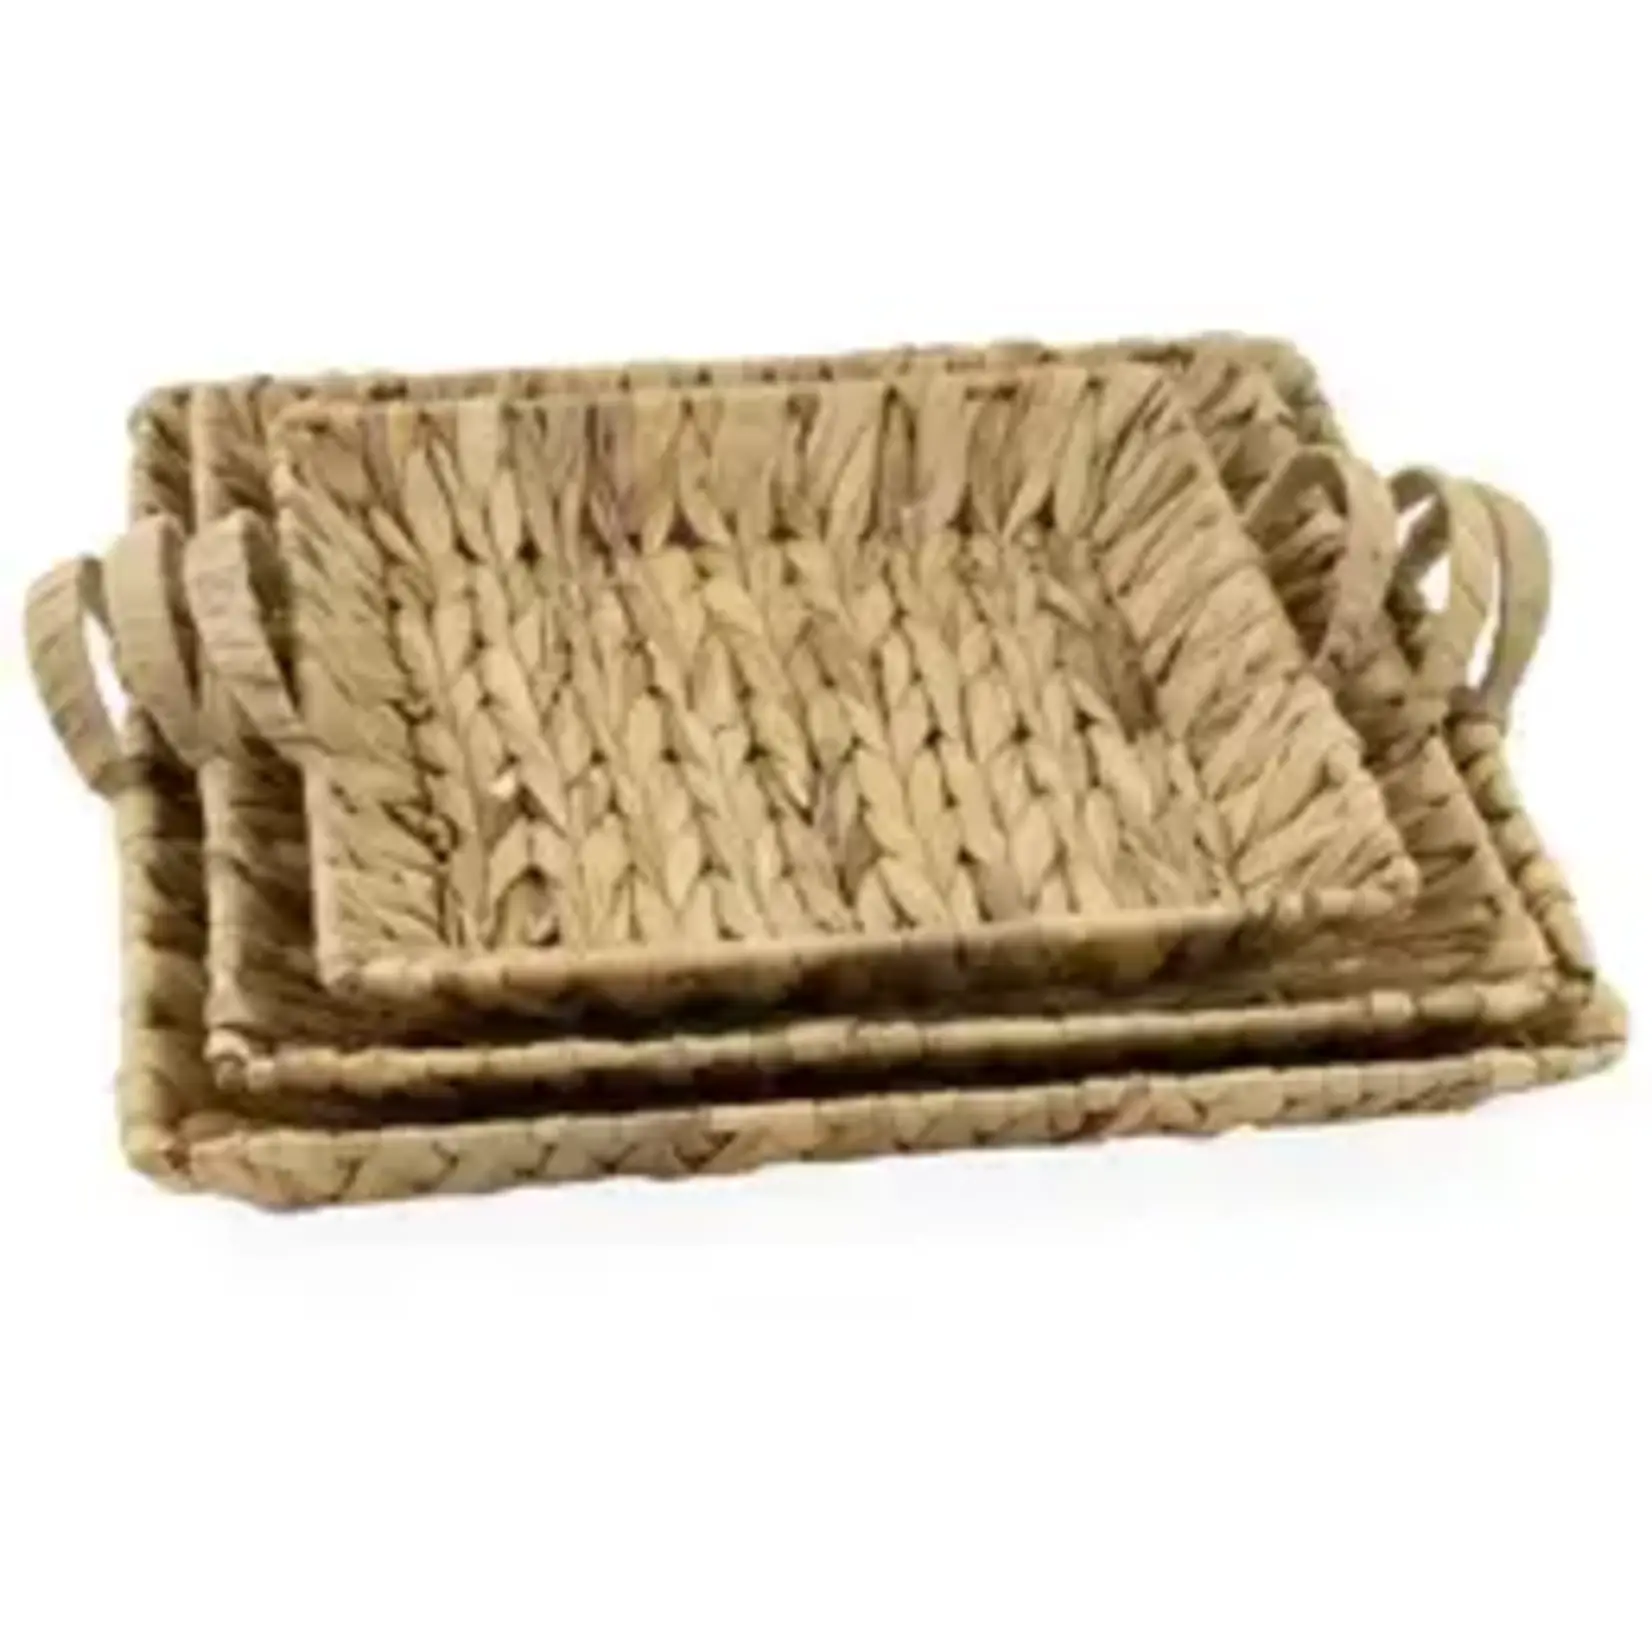 Boston International Import Woven Seagrass Basket Tray - Large